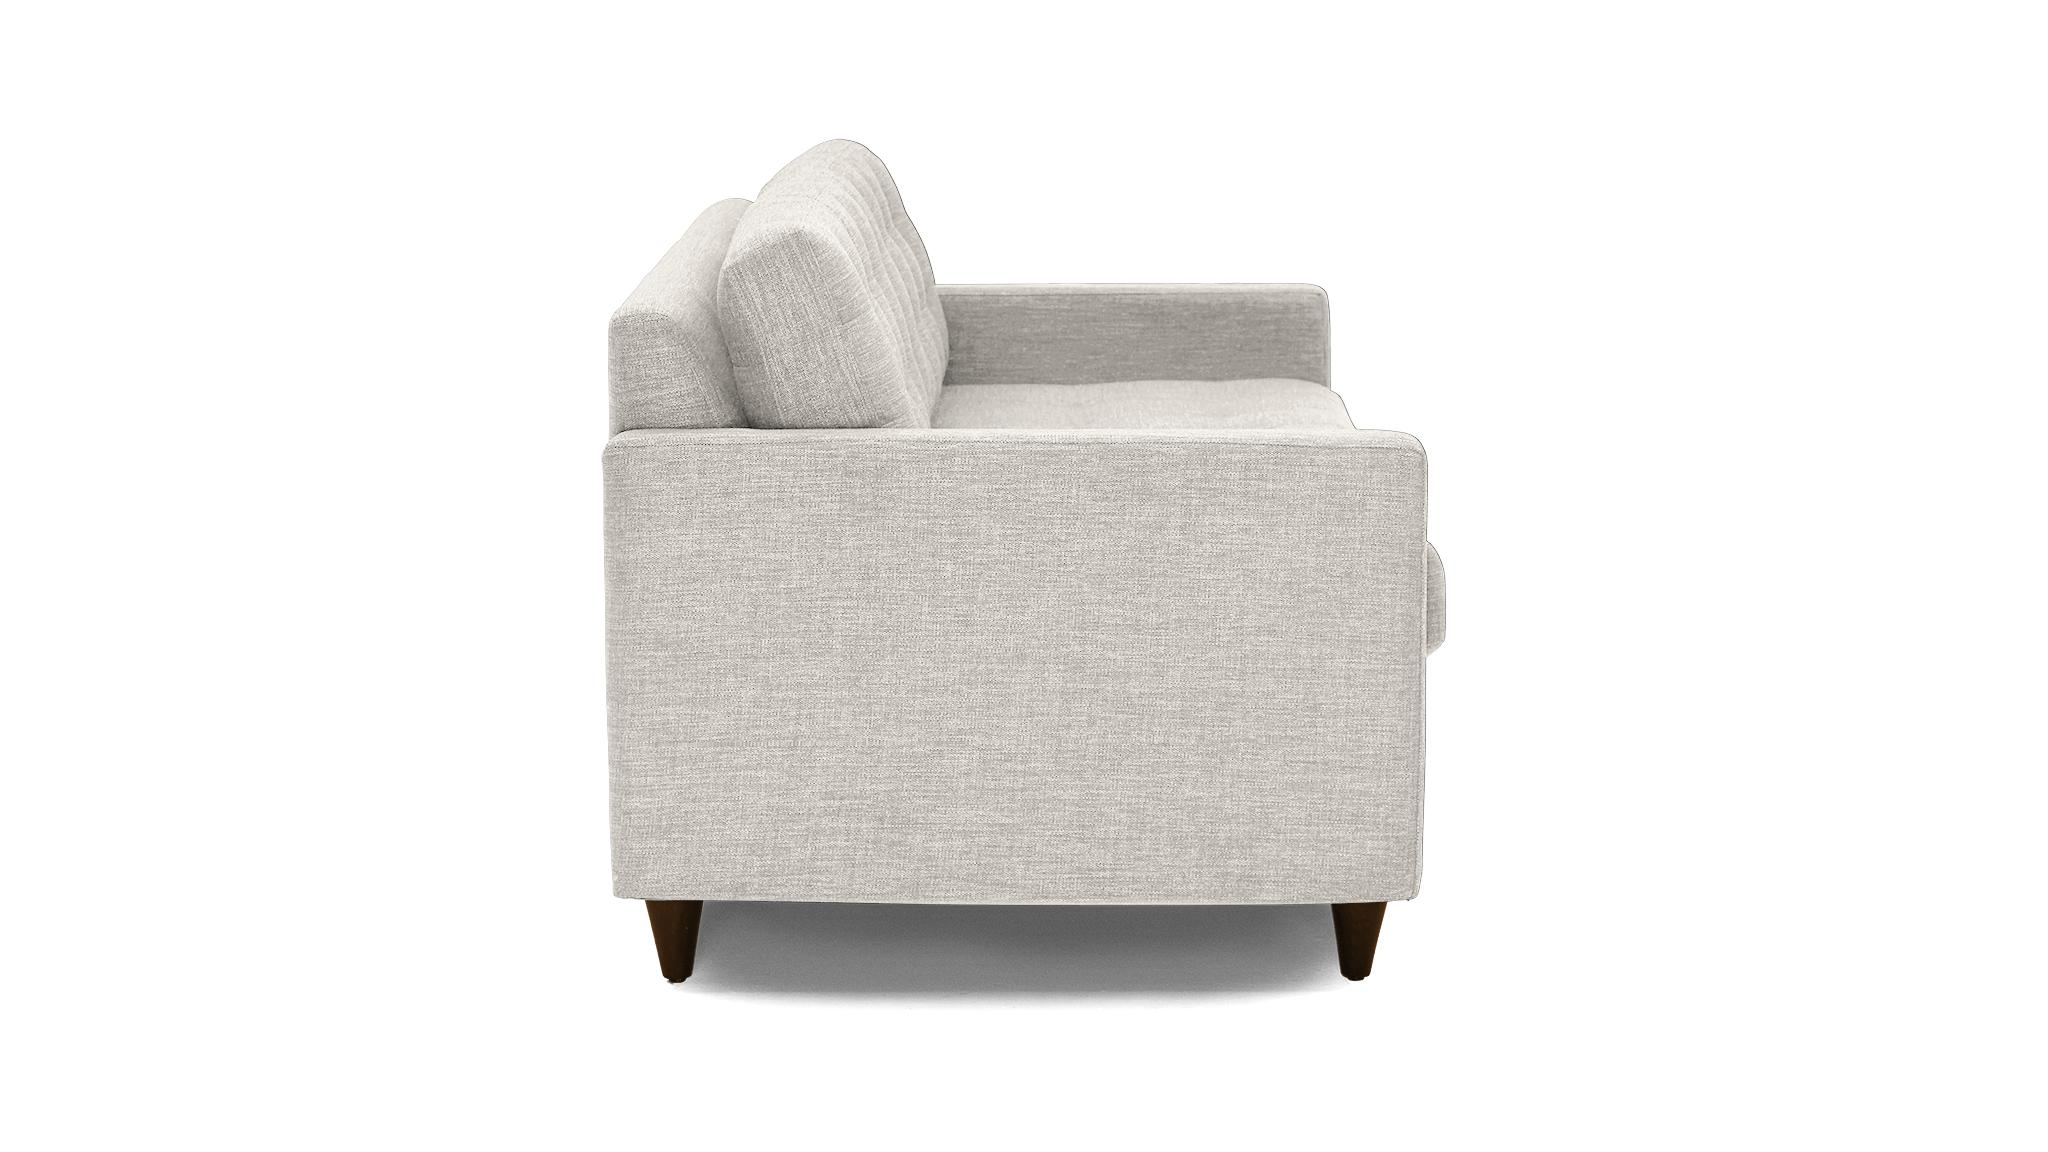 Gray Eliot Mid Century Modern Sleeper Sofa - Notion Gunsmoke - Mocha - Foam - Image 2